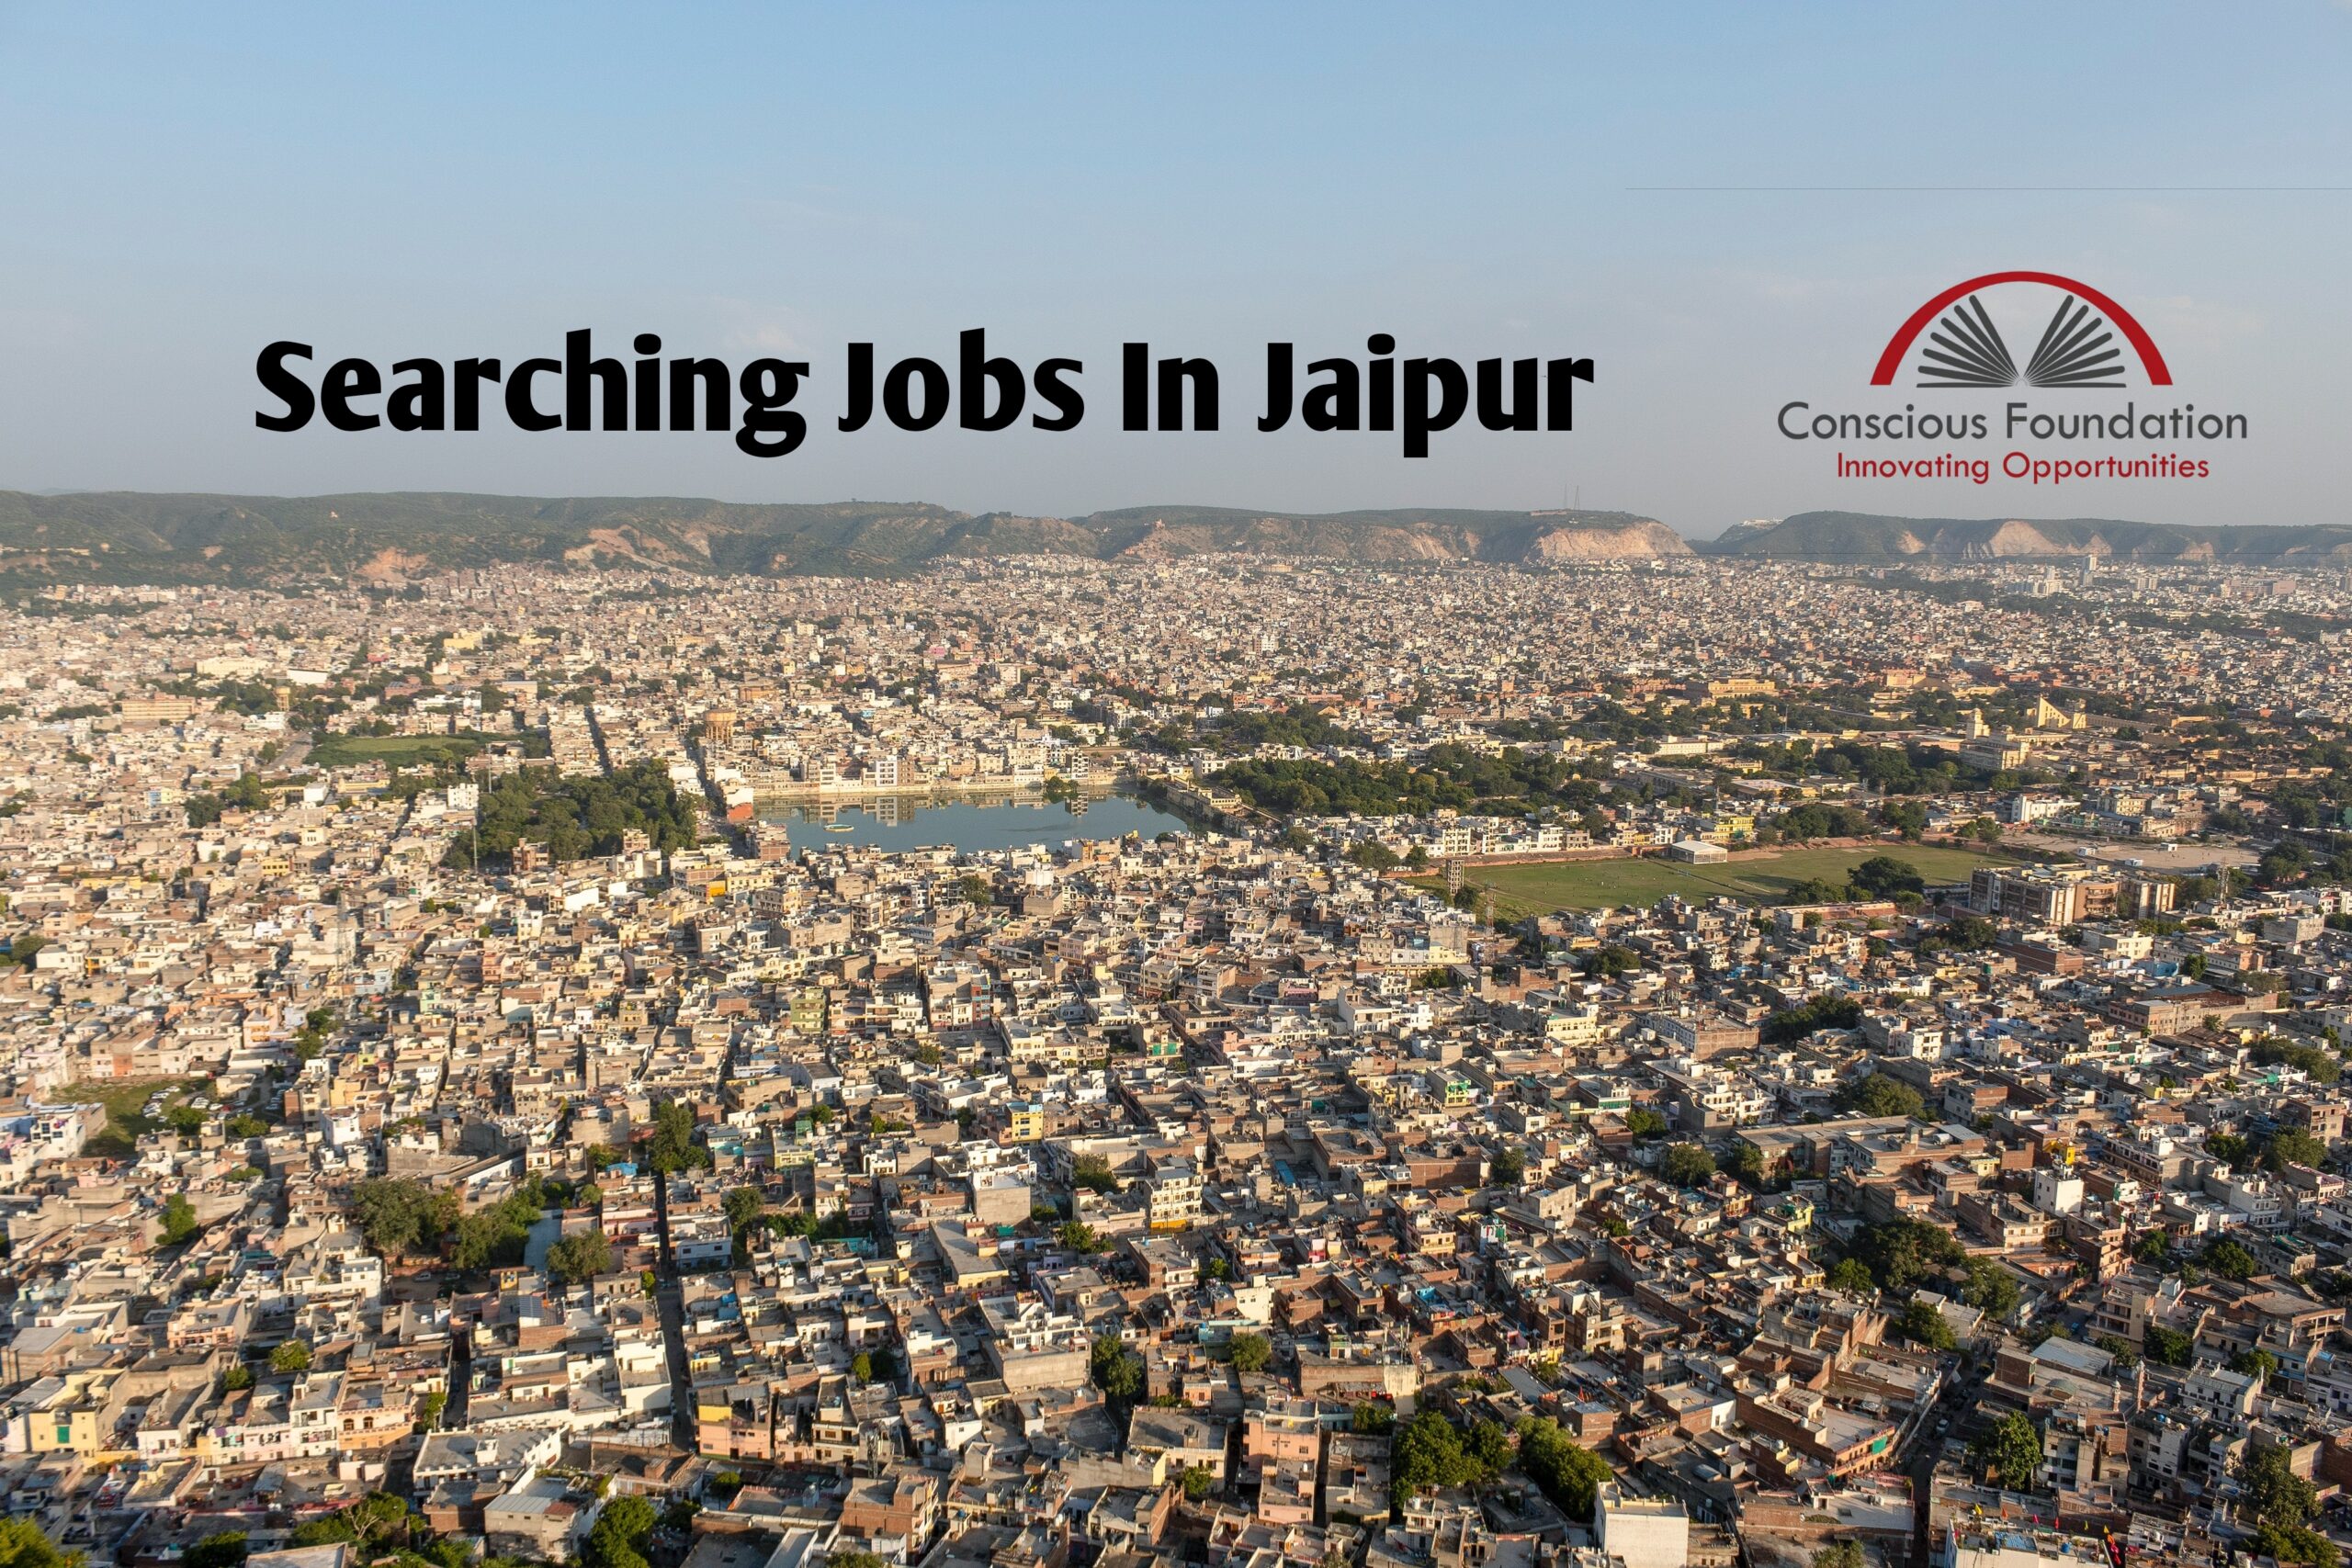 Conscious-Foundation-Jobs-in-Jaipur-Software-company-in-Jaipur-Salesforce-Job-description-consultancy-in-jaipur-recruitment-staffing-pexels-sagar-soneji-3581694.jpg